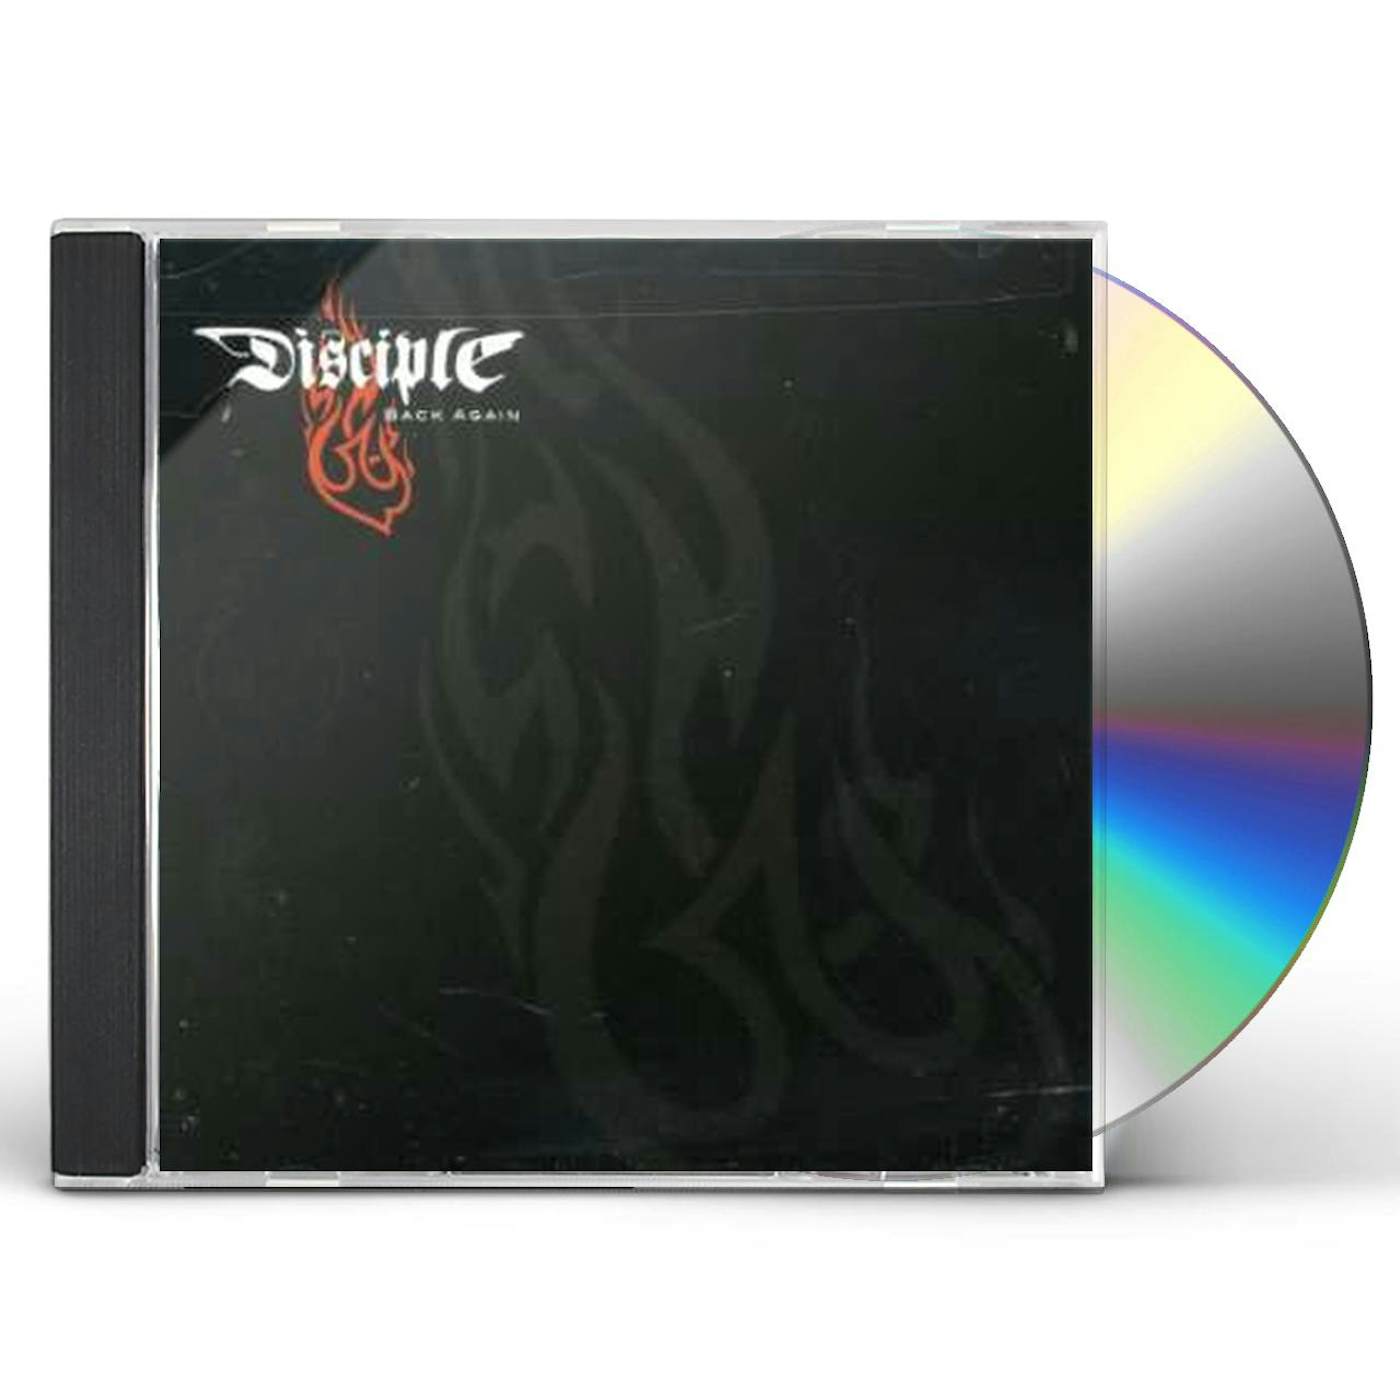 Disciple 167761 BACK AGAIN CD